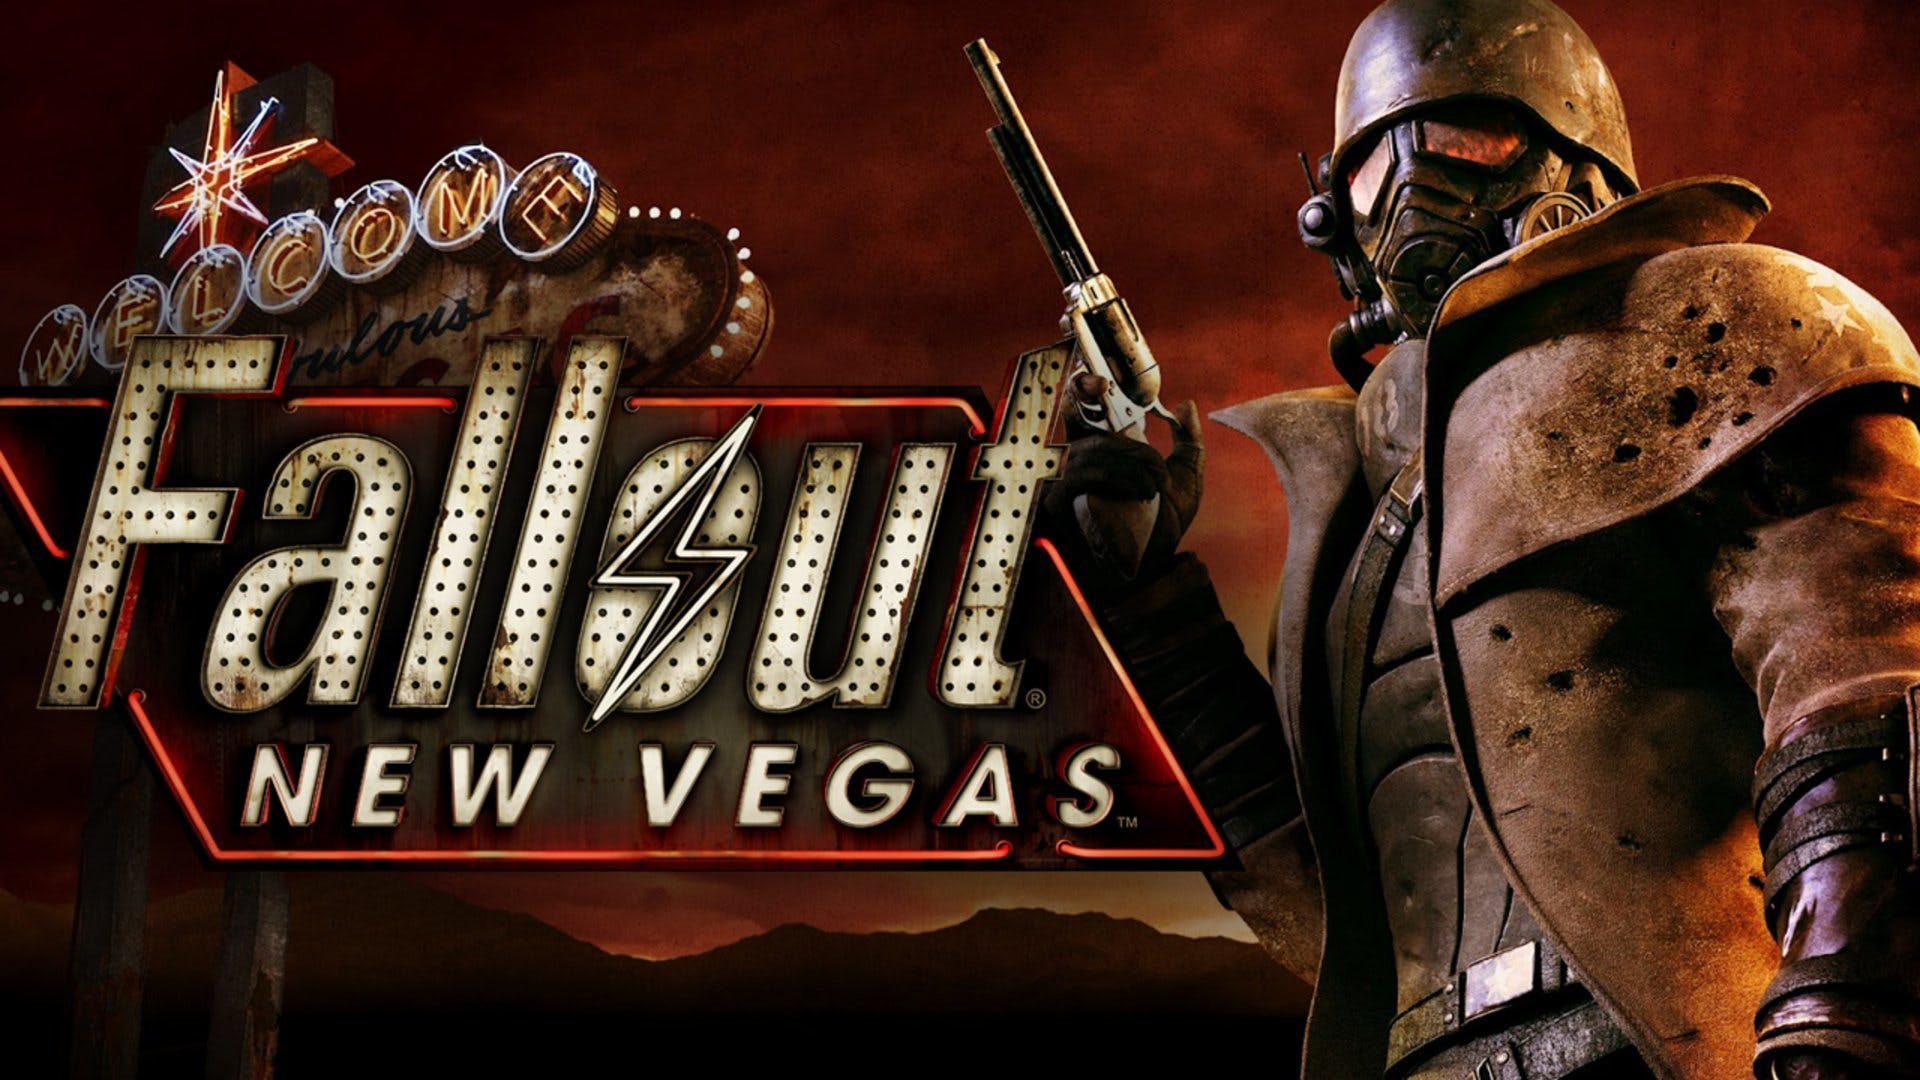 Fallout New Vegas - Ultimate Edition (2012) - День 7 (Slow Run)  - Part 5